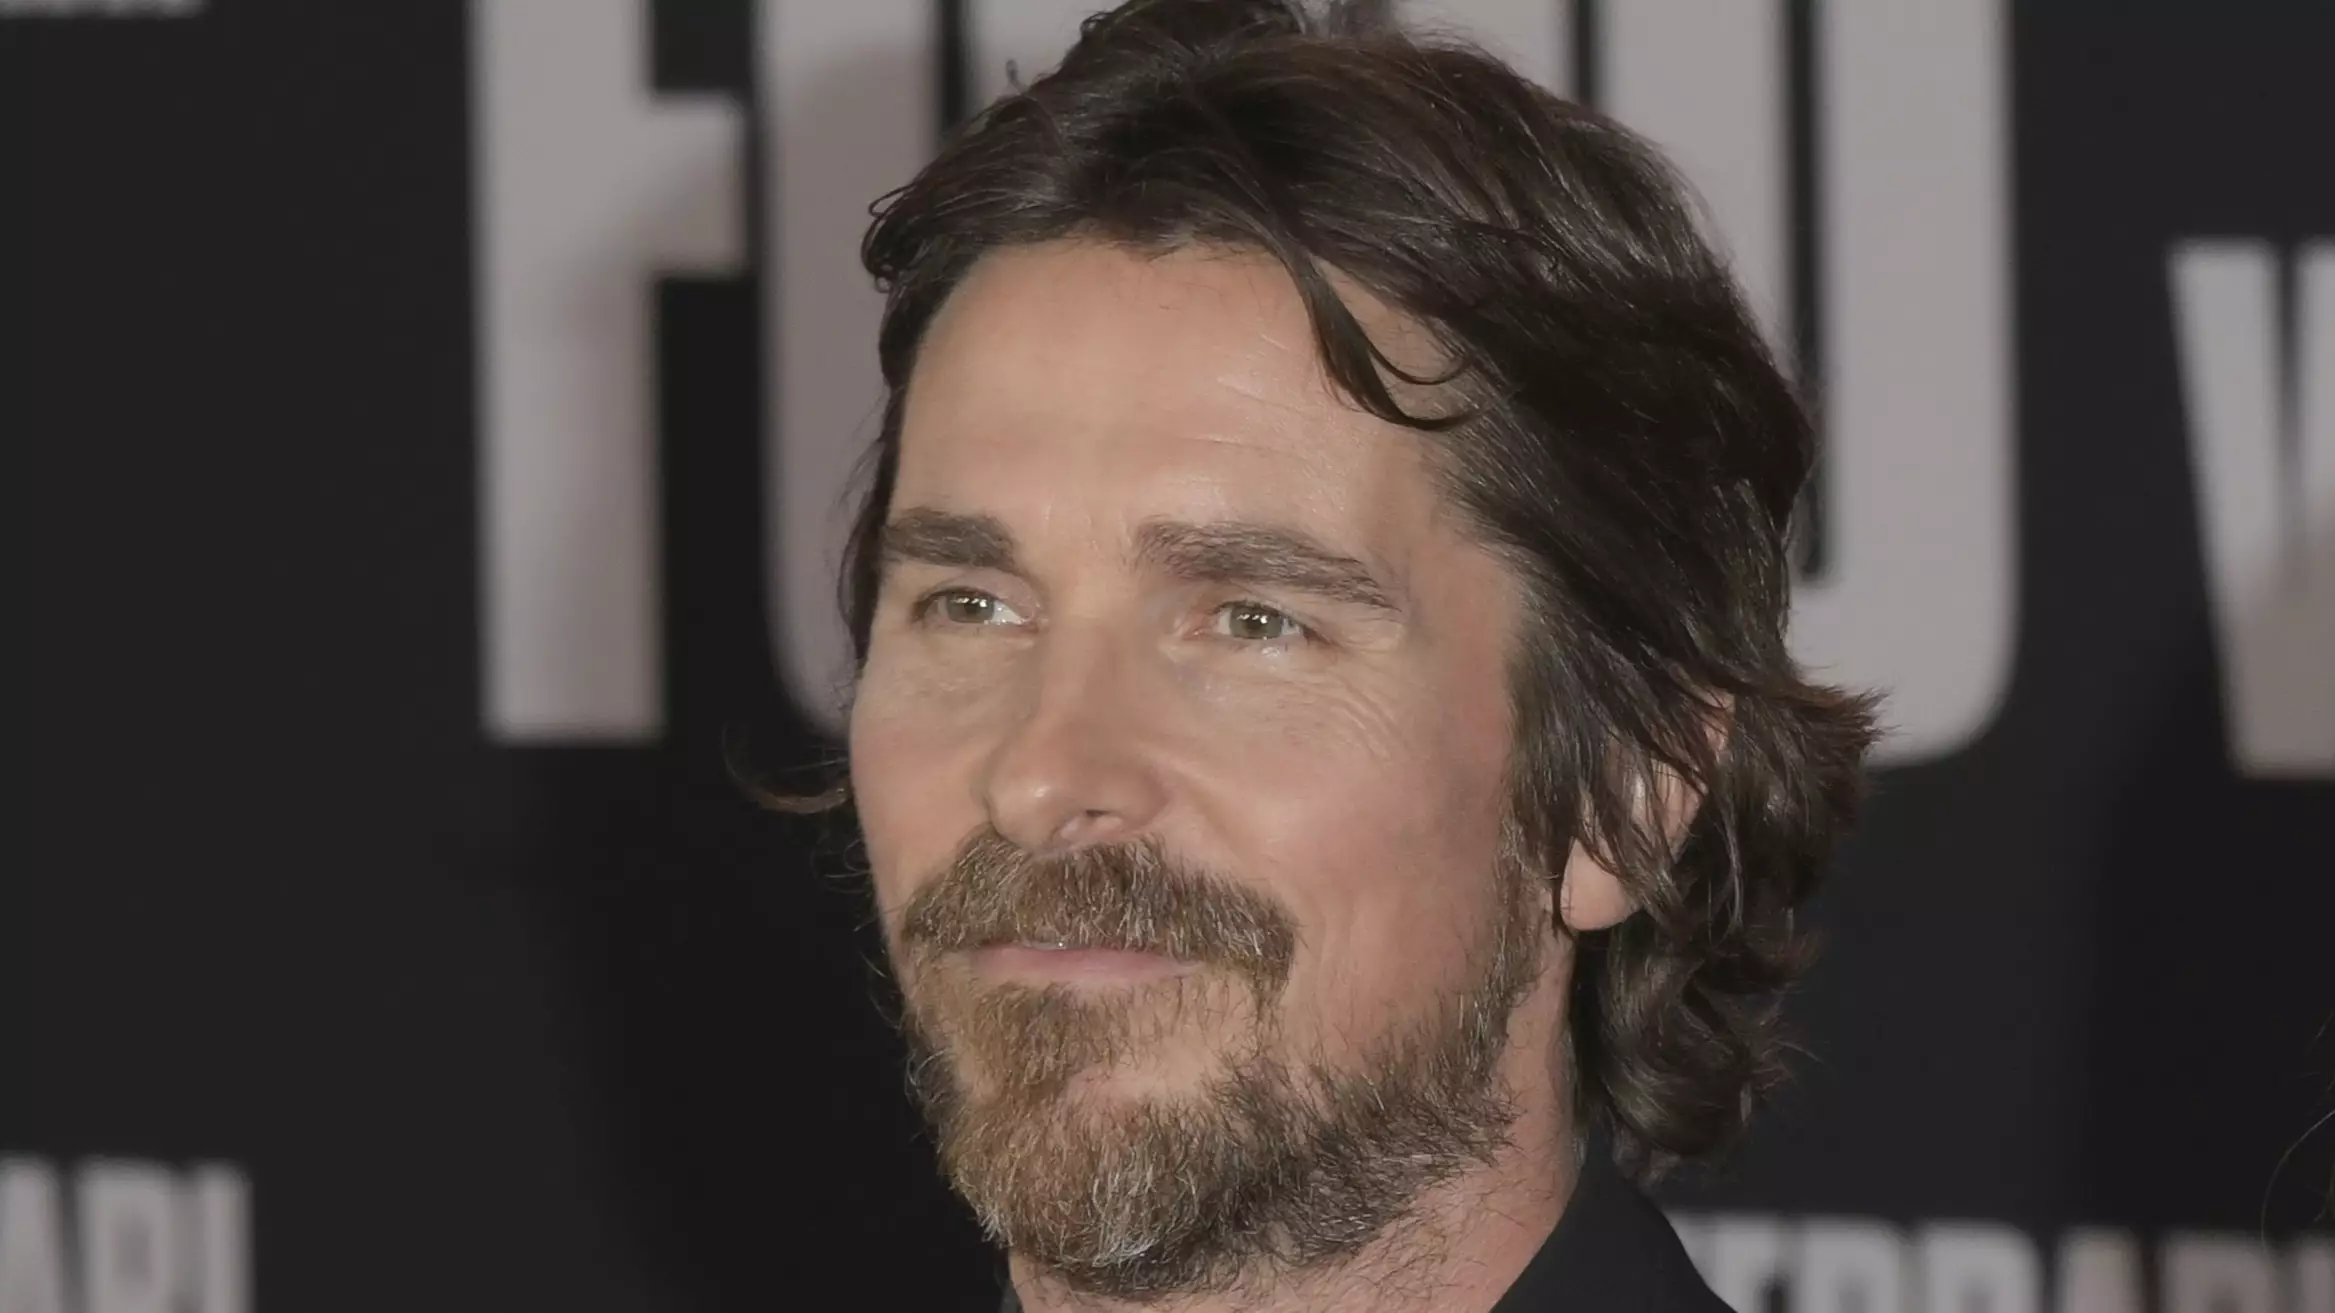 Christian Bale Joins Marvel As Villain For Thor: Love and Thunder